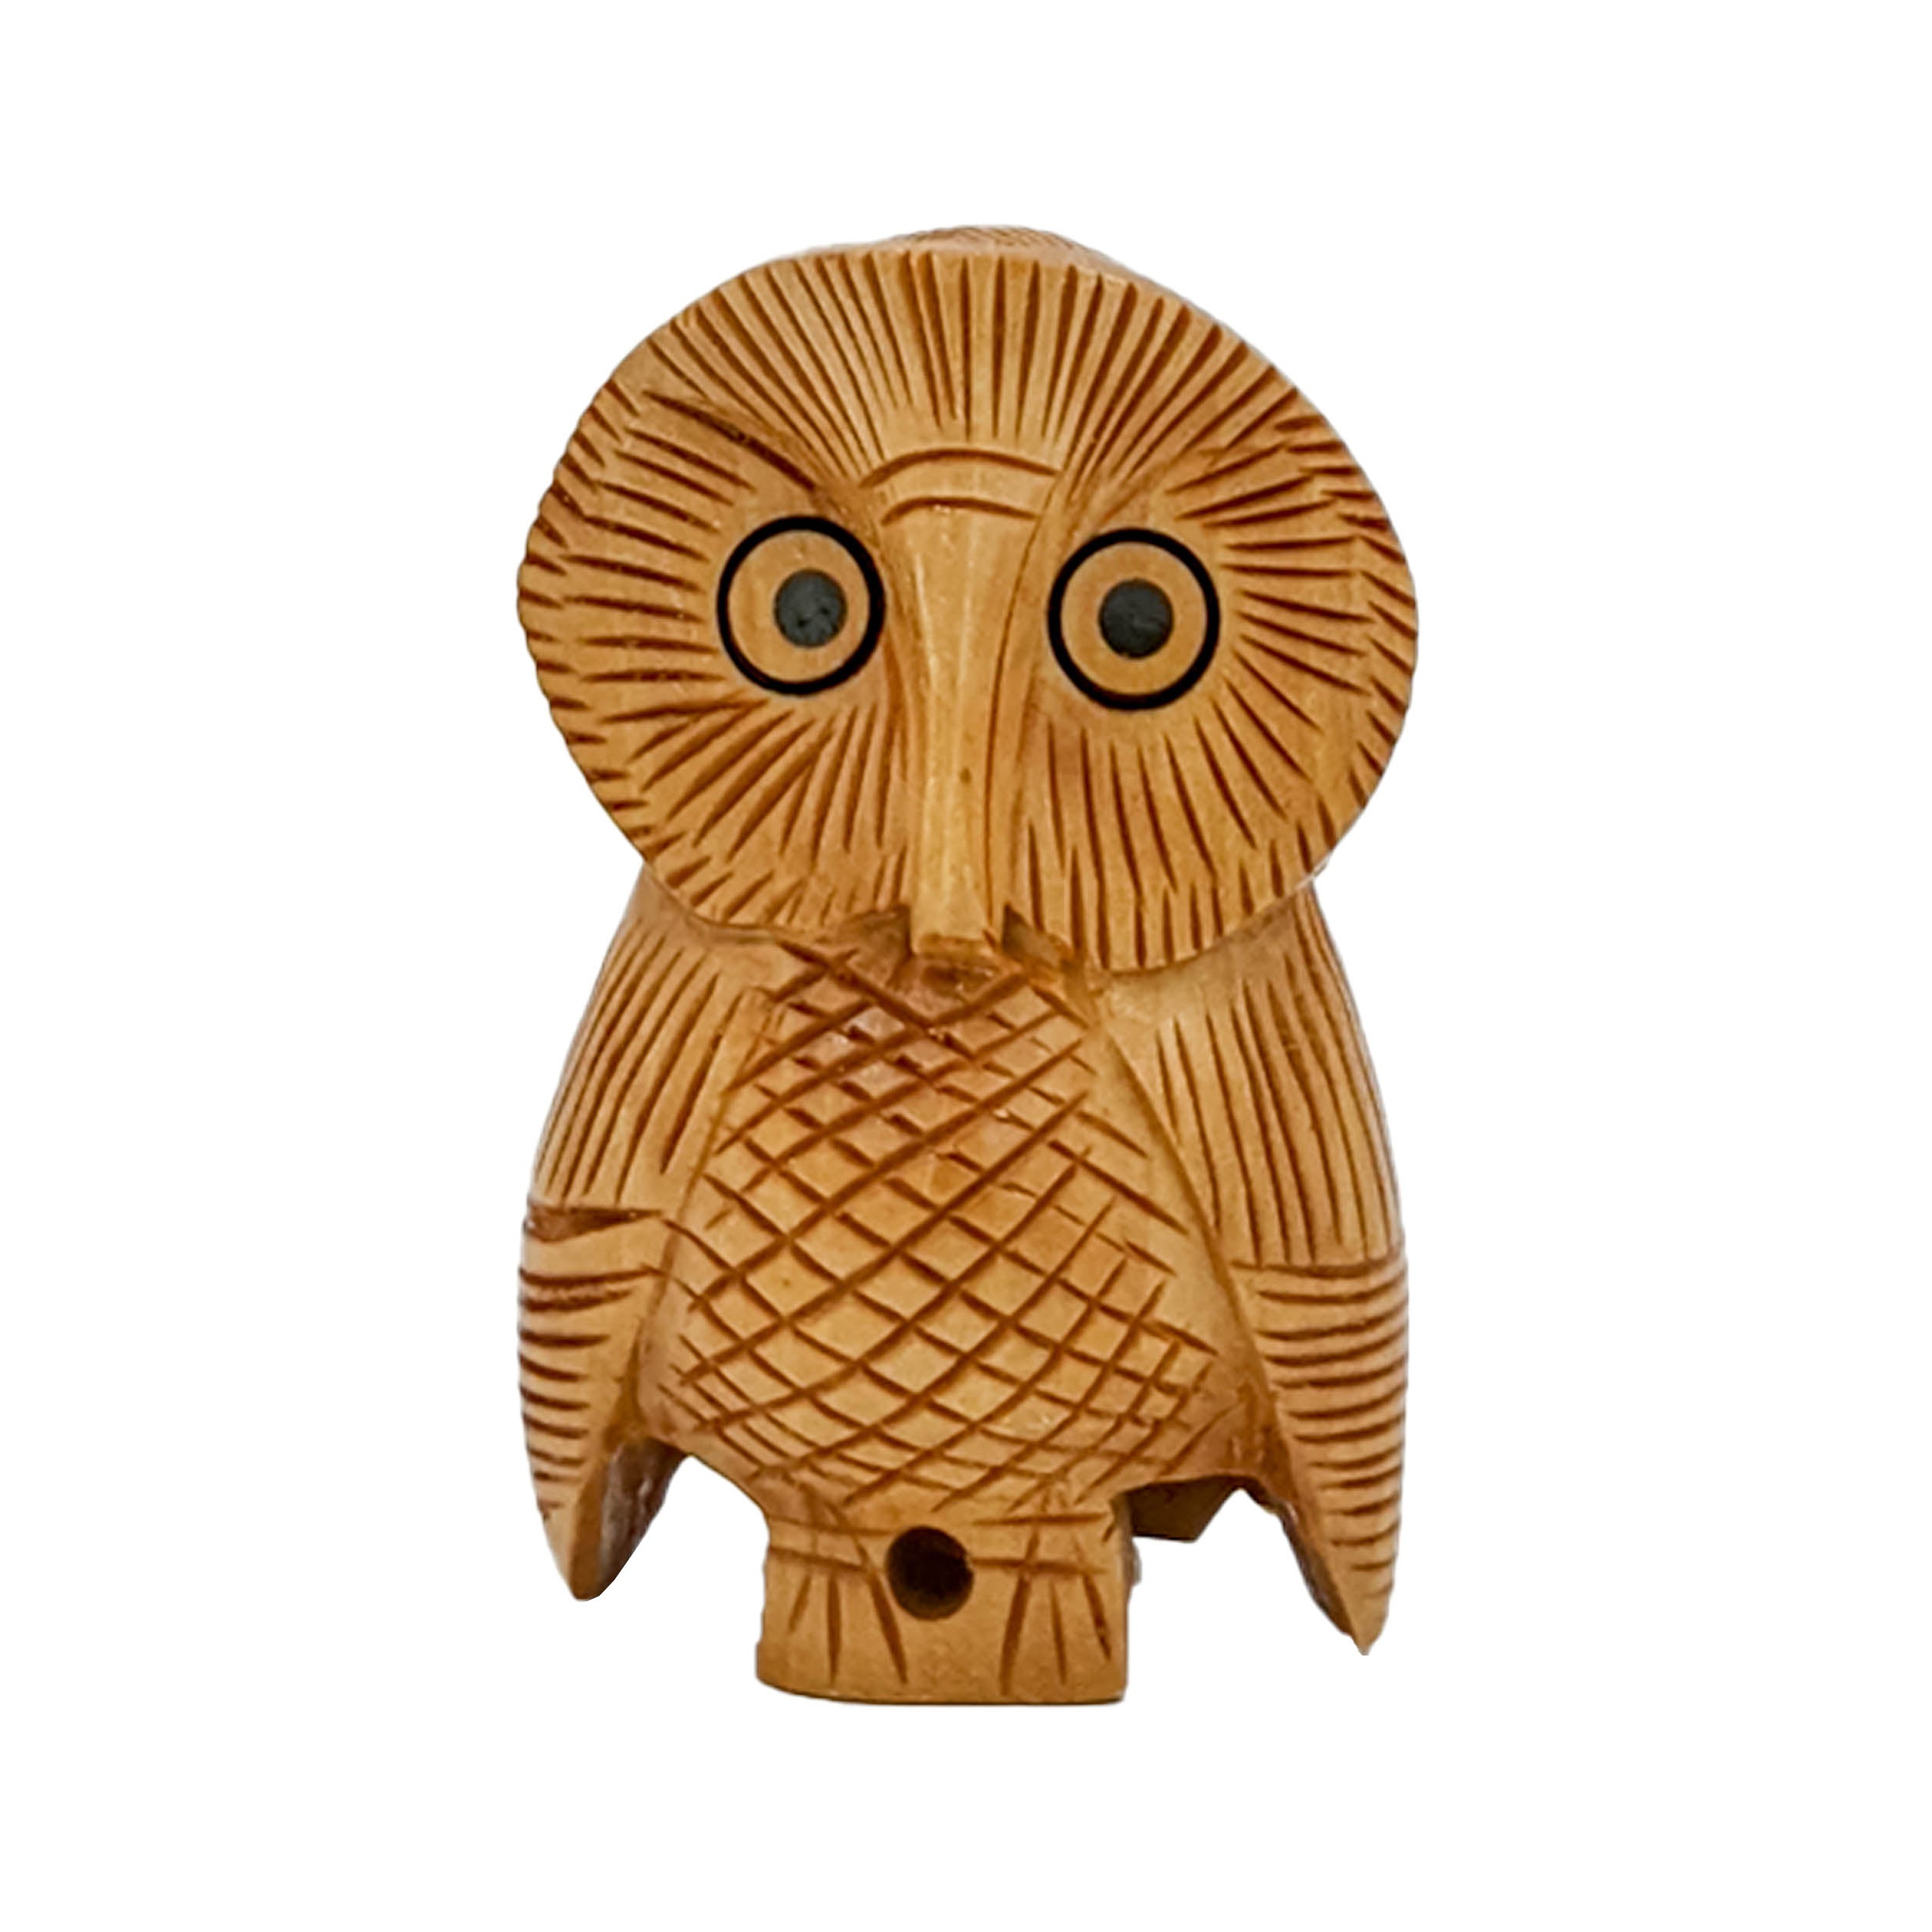 Handmade Wooden Owl Sitting